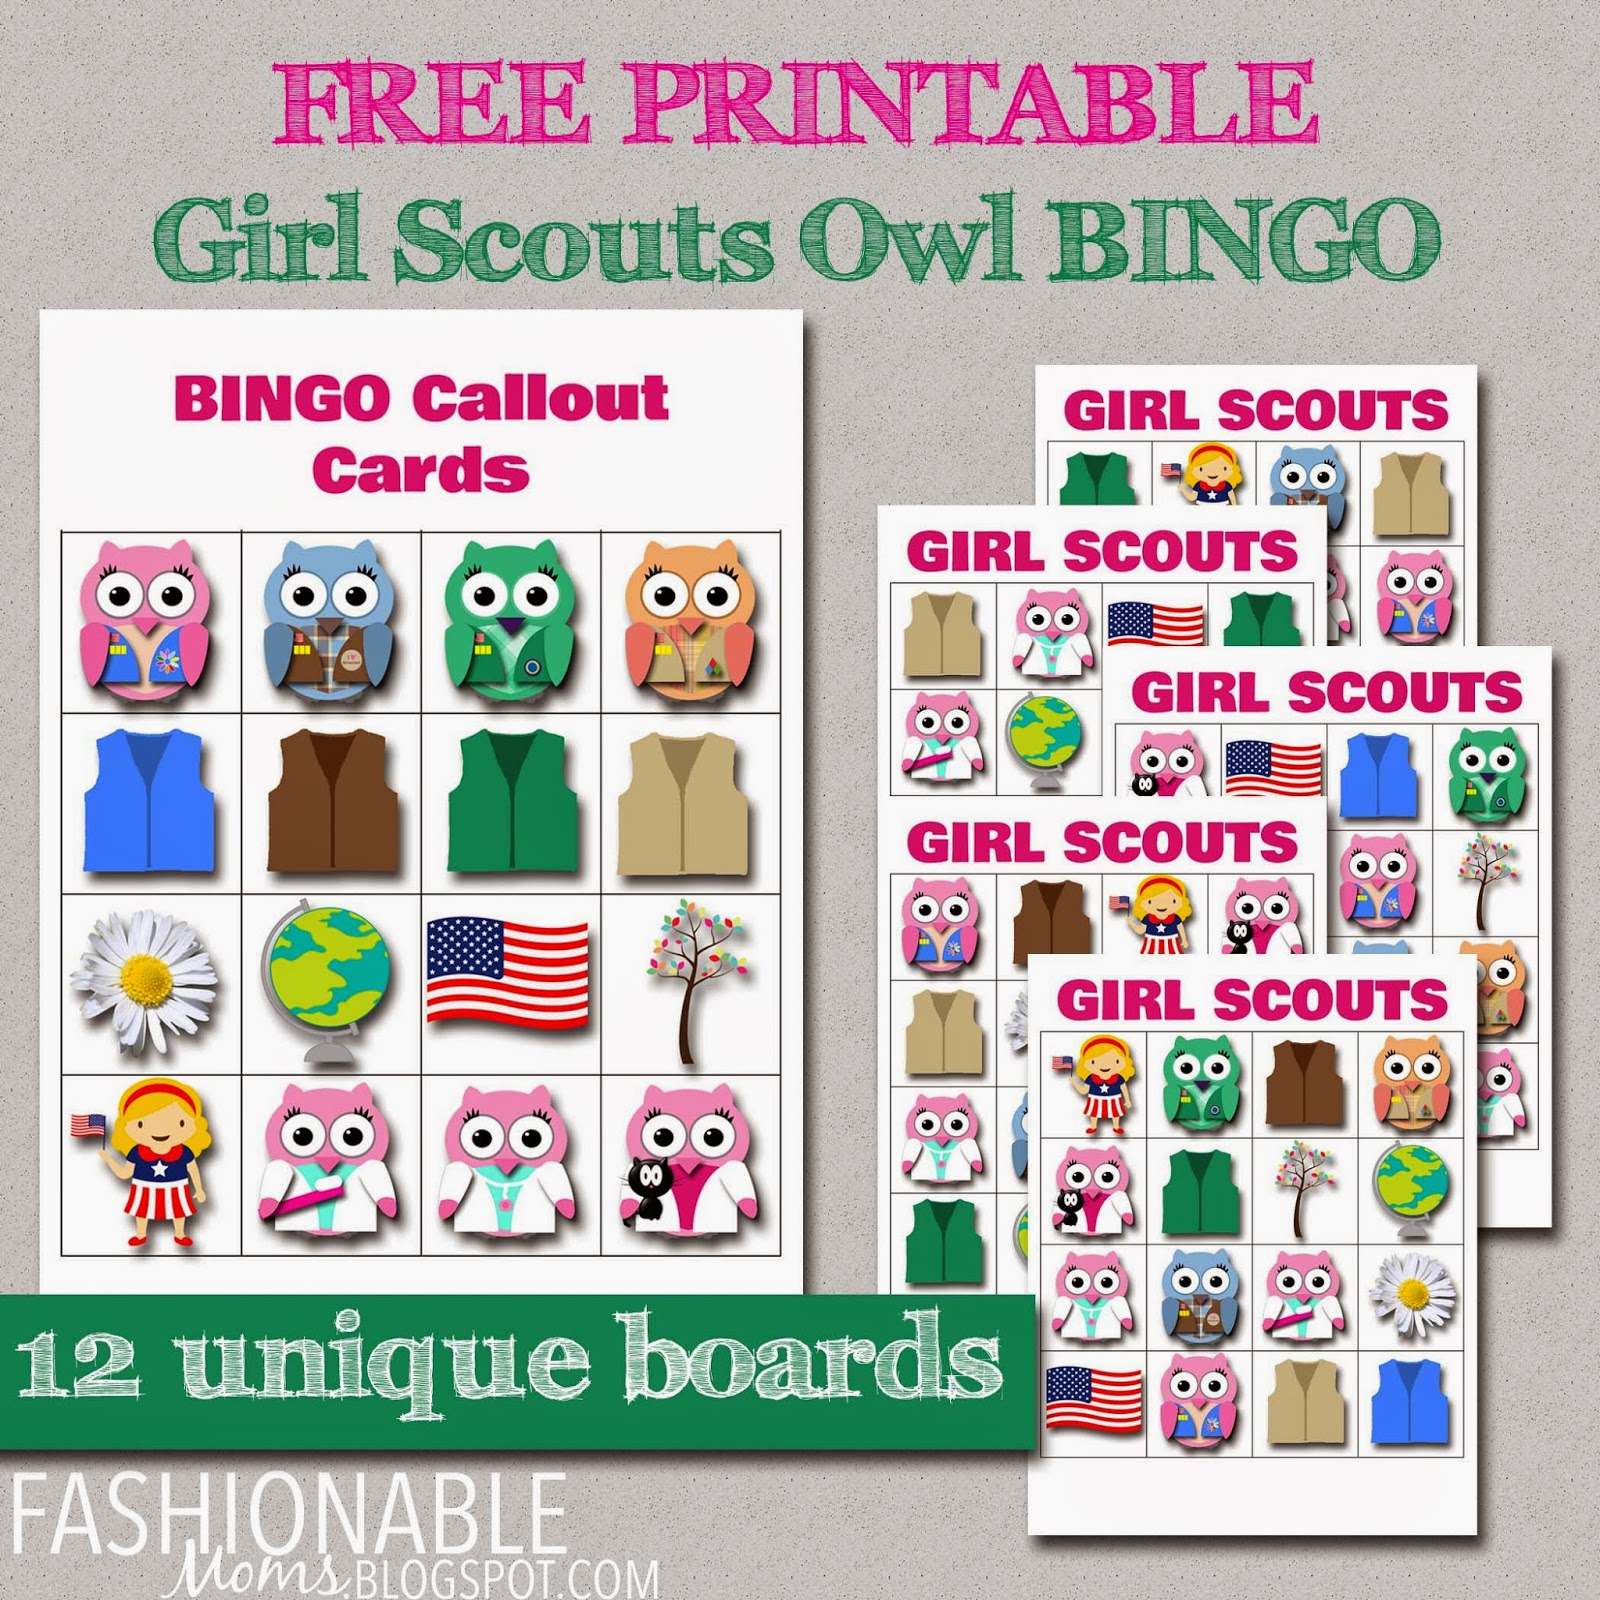 My Fashionable Designs: Free Printable Mini Owl Girl Scouts